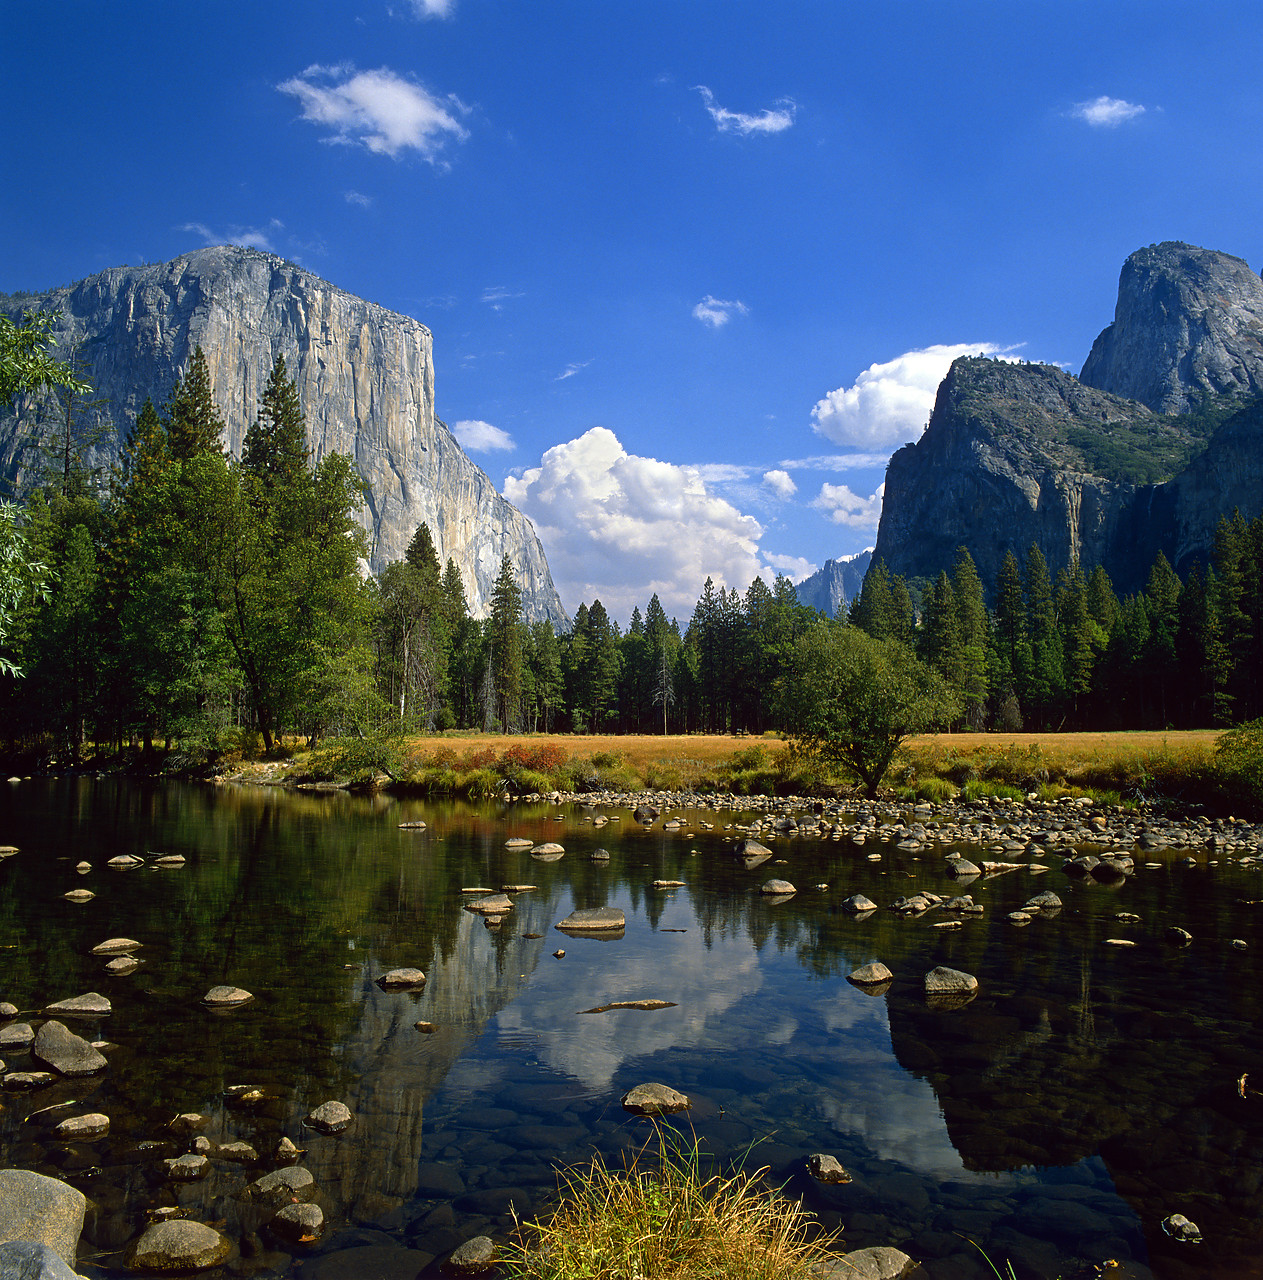 #881601-6 - El Capitan Reflecting in Merced River, Yosemite National Park, California, USA